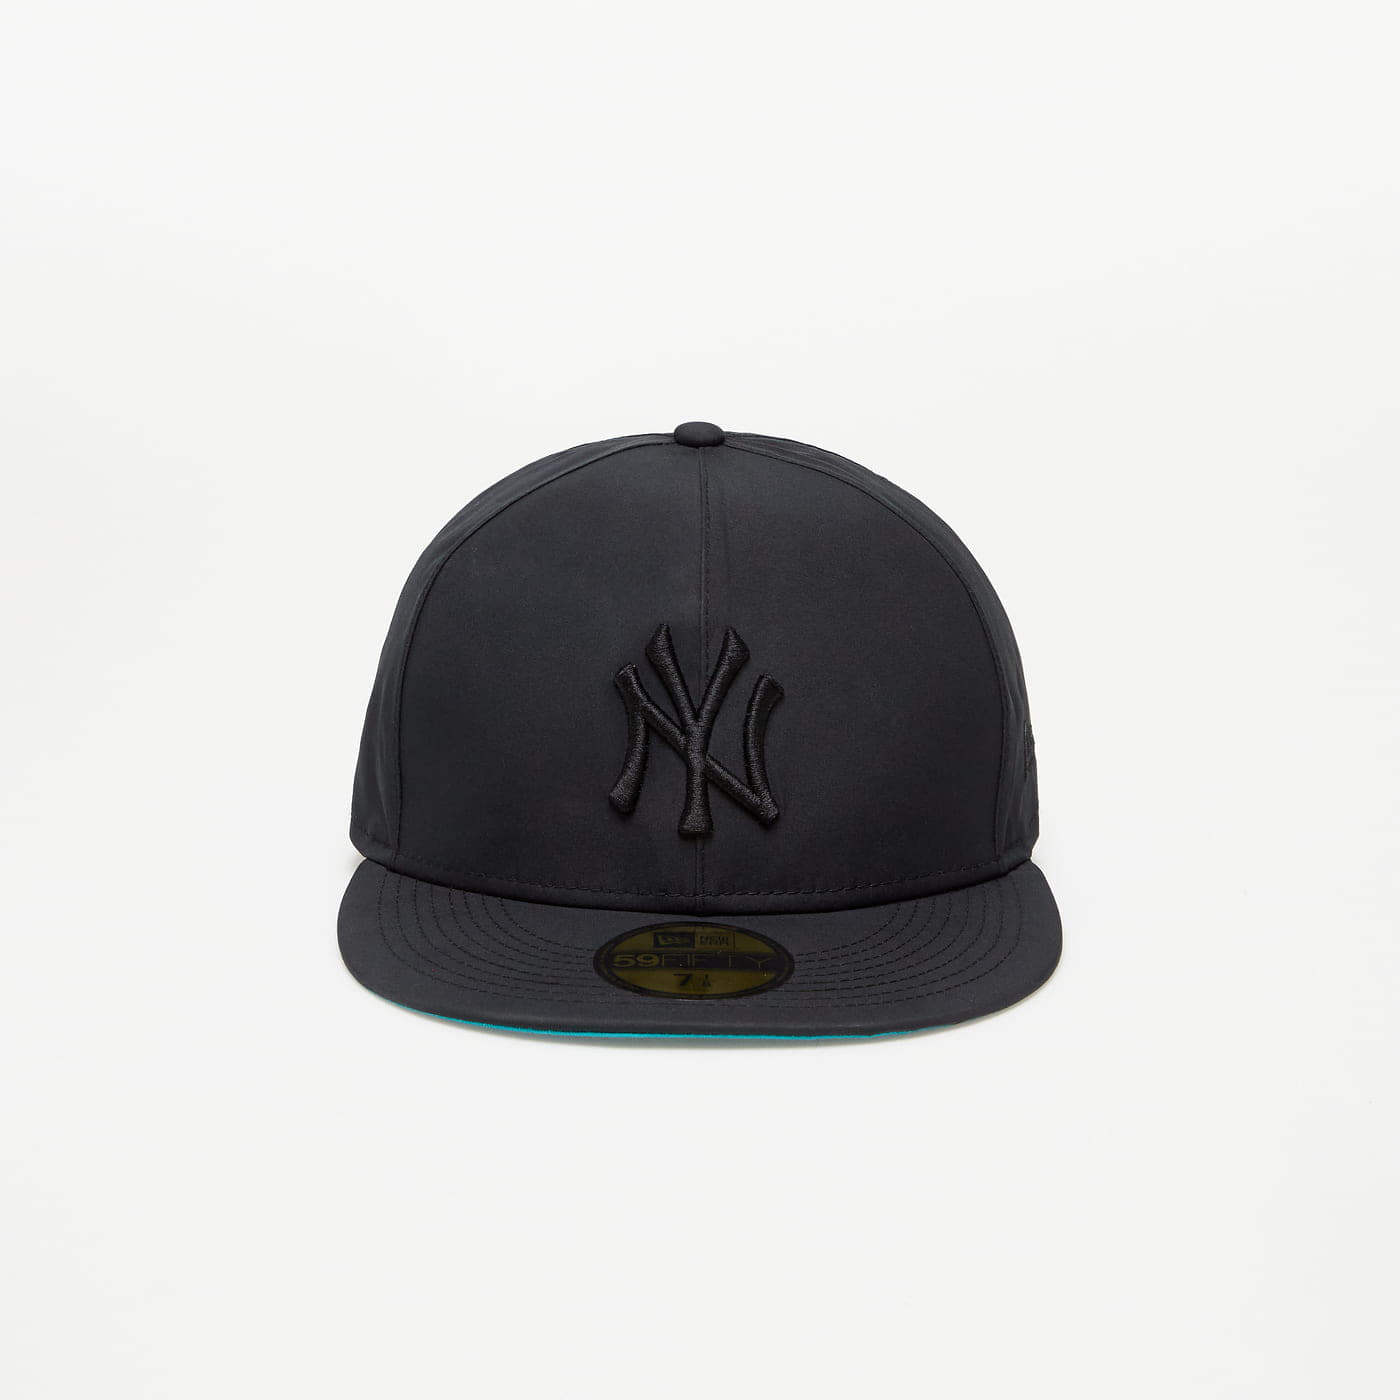 Caps New Era Gore-Tex New York Yankees 59FIFTY Fitted Cap Black